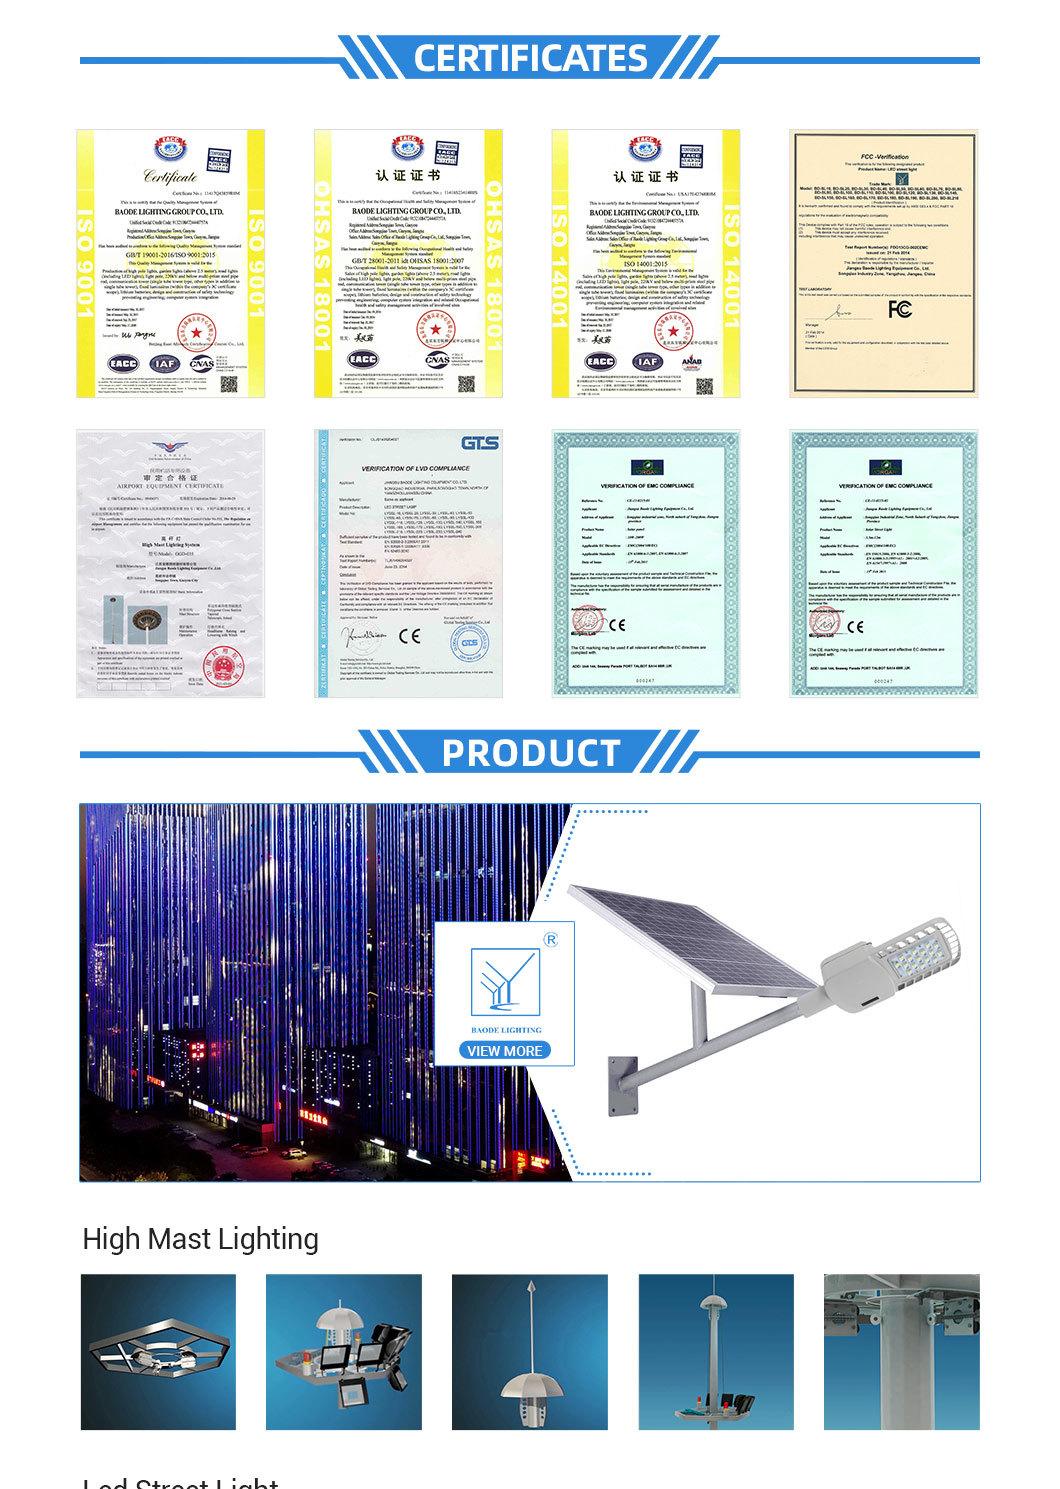 Outdoor Lights 4m-15m 20W-200W LED Street Light&Solar Street Light Best Price